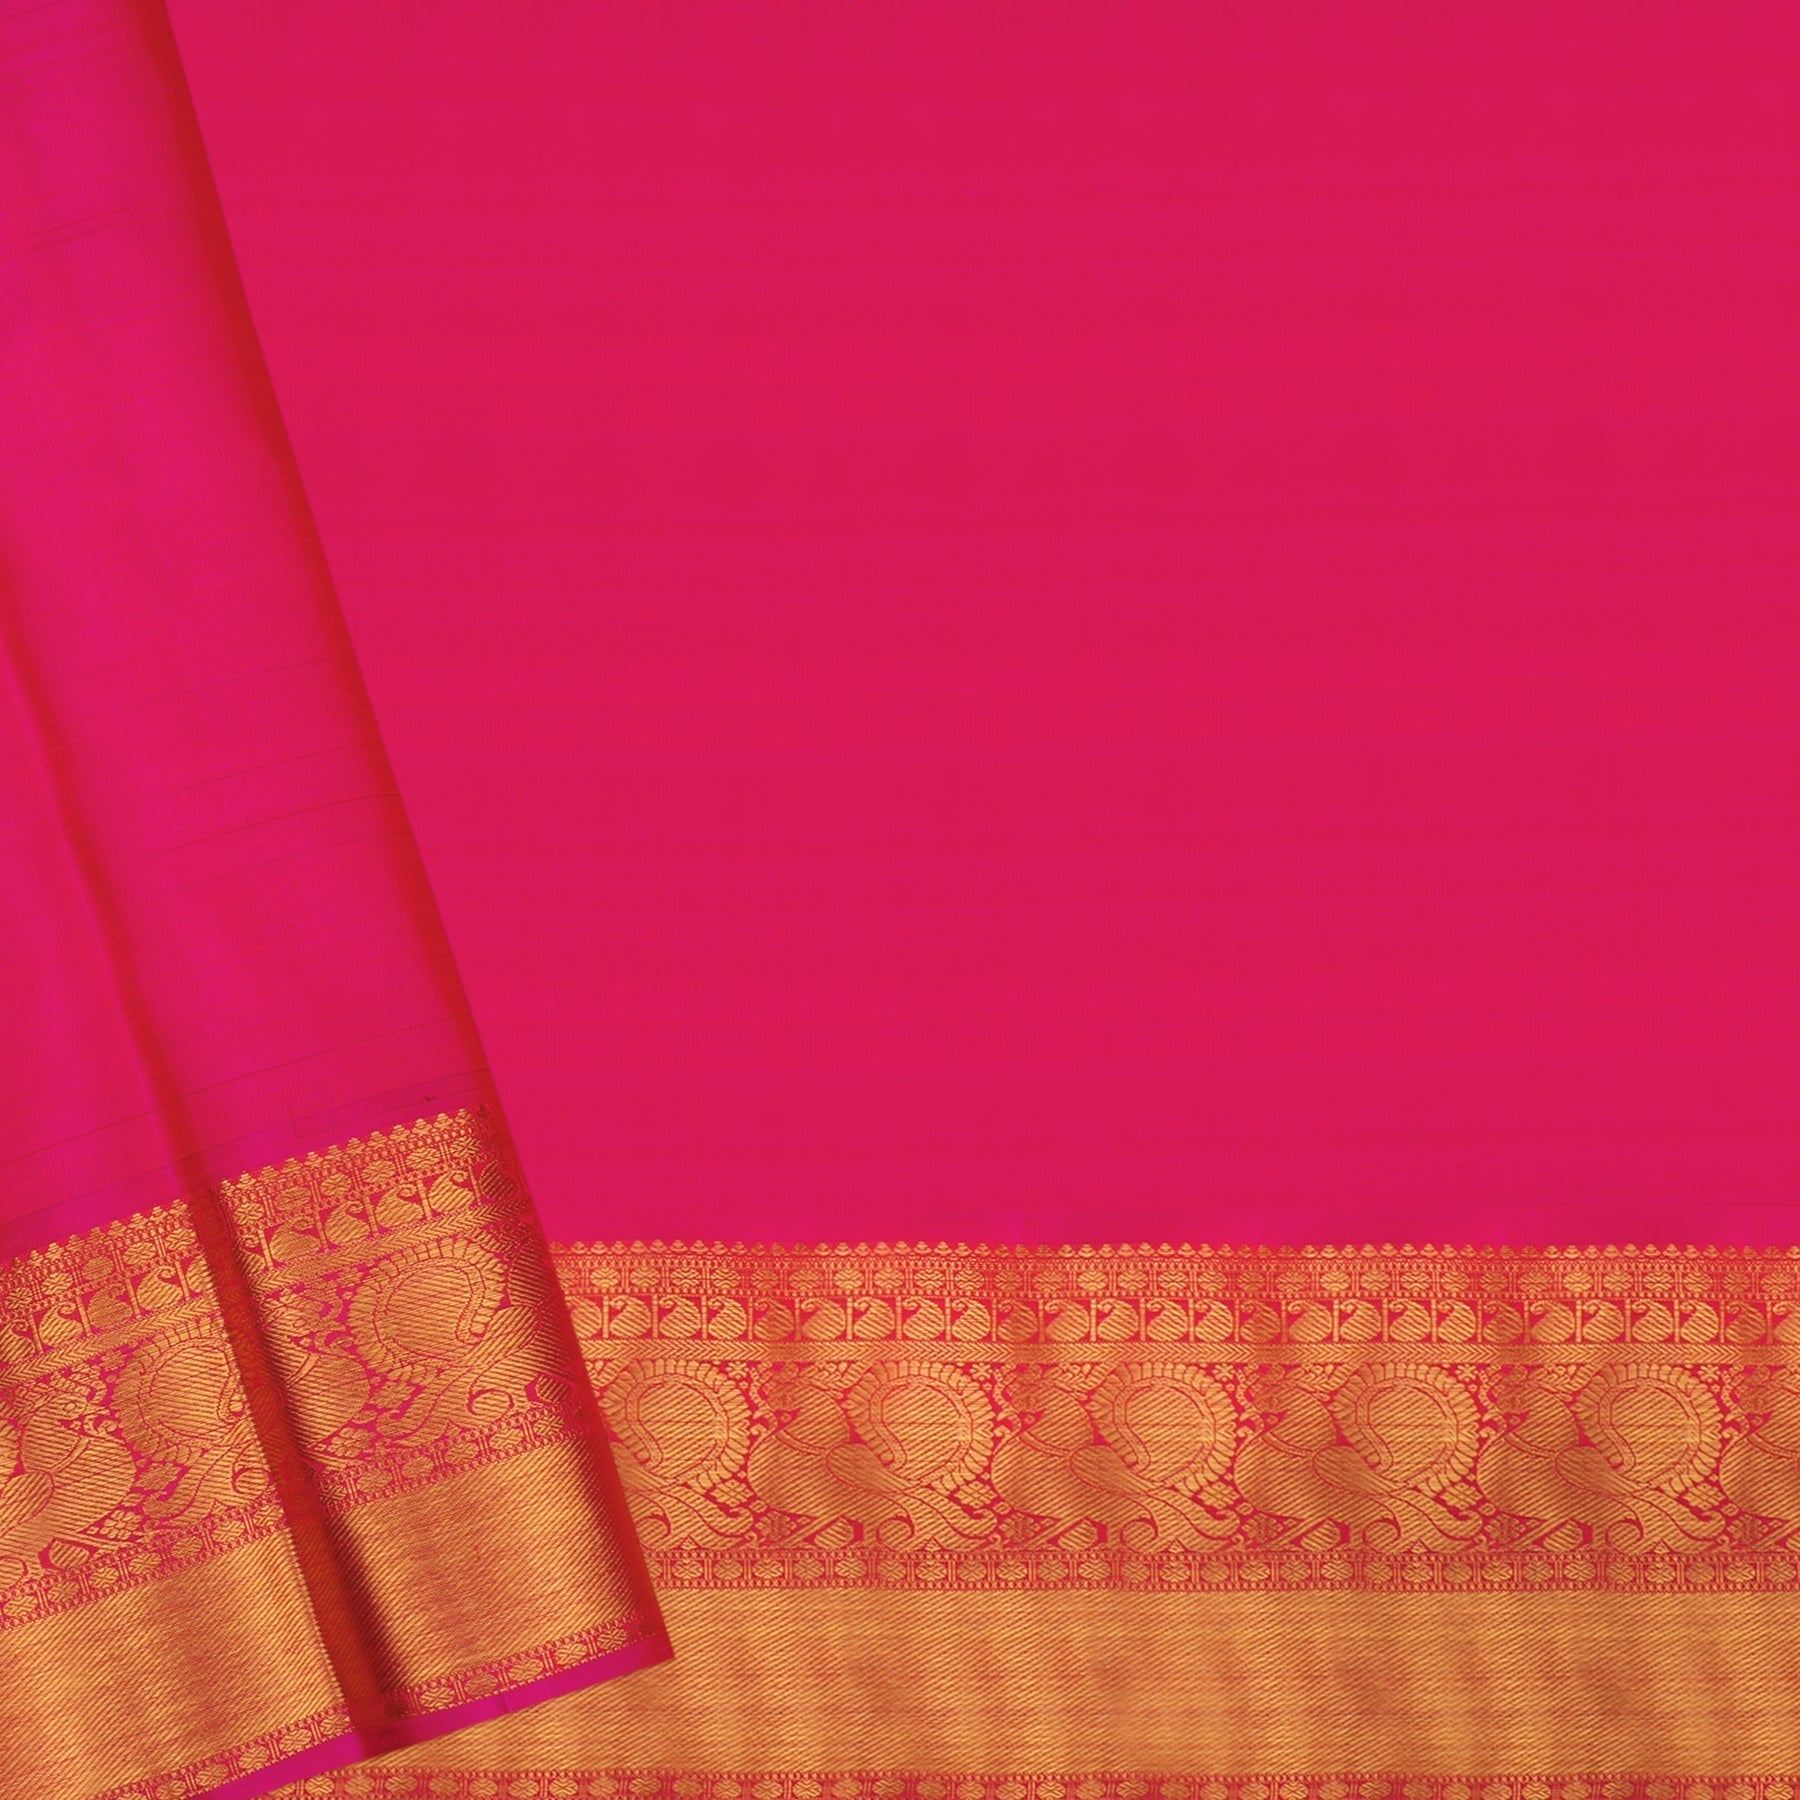 Kanakavalli Kanjivaram Silk Sari 22-599-HS001-01977 - Blouse View